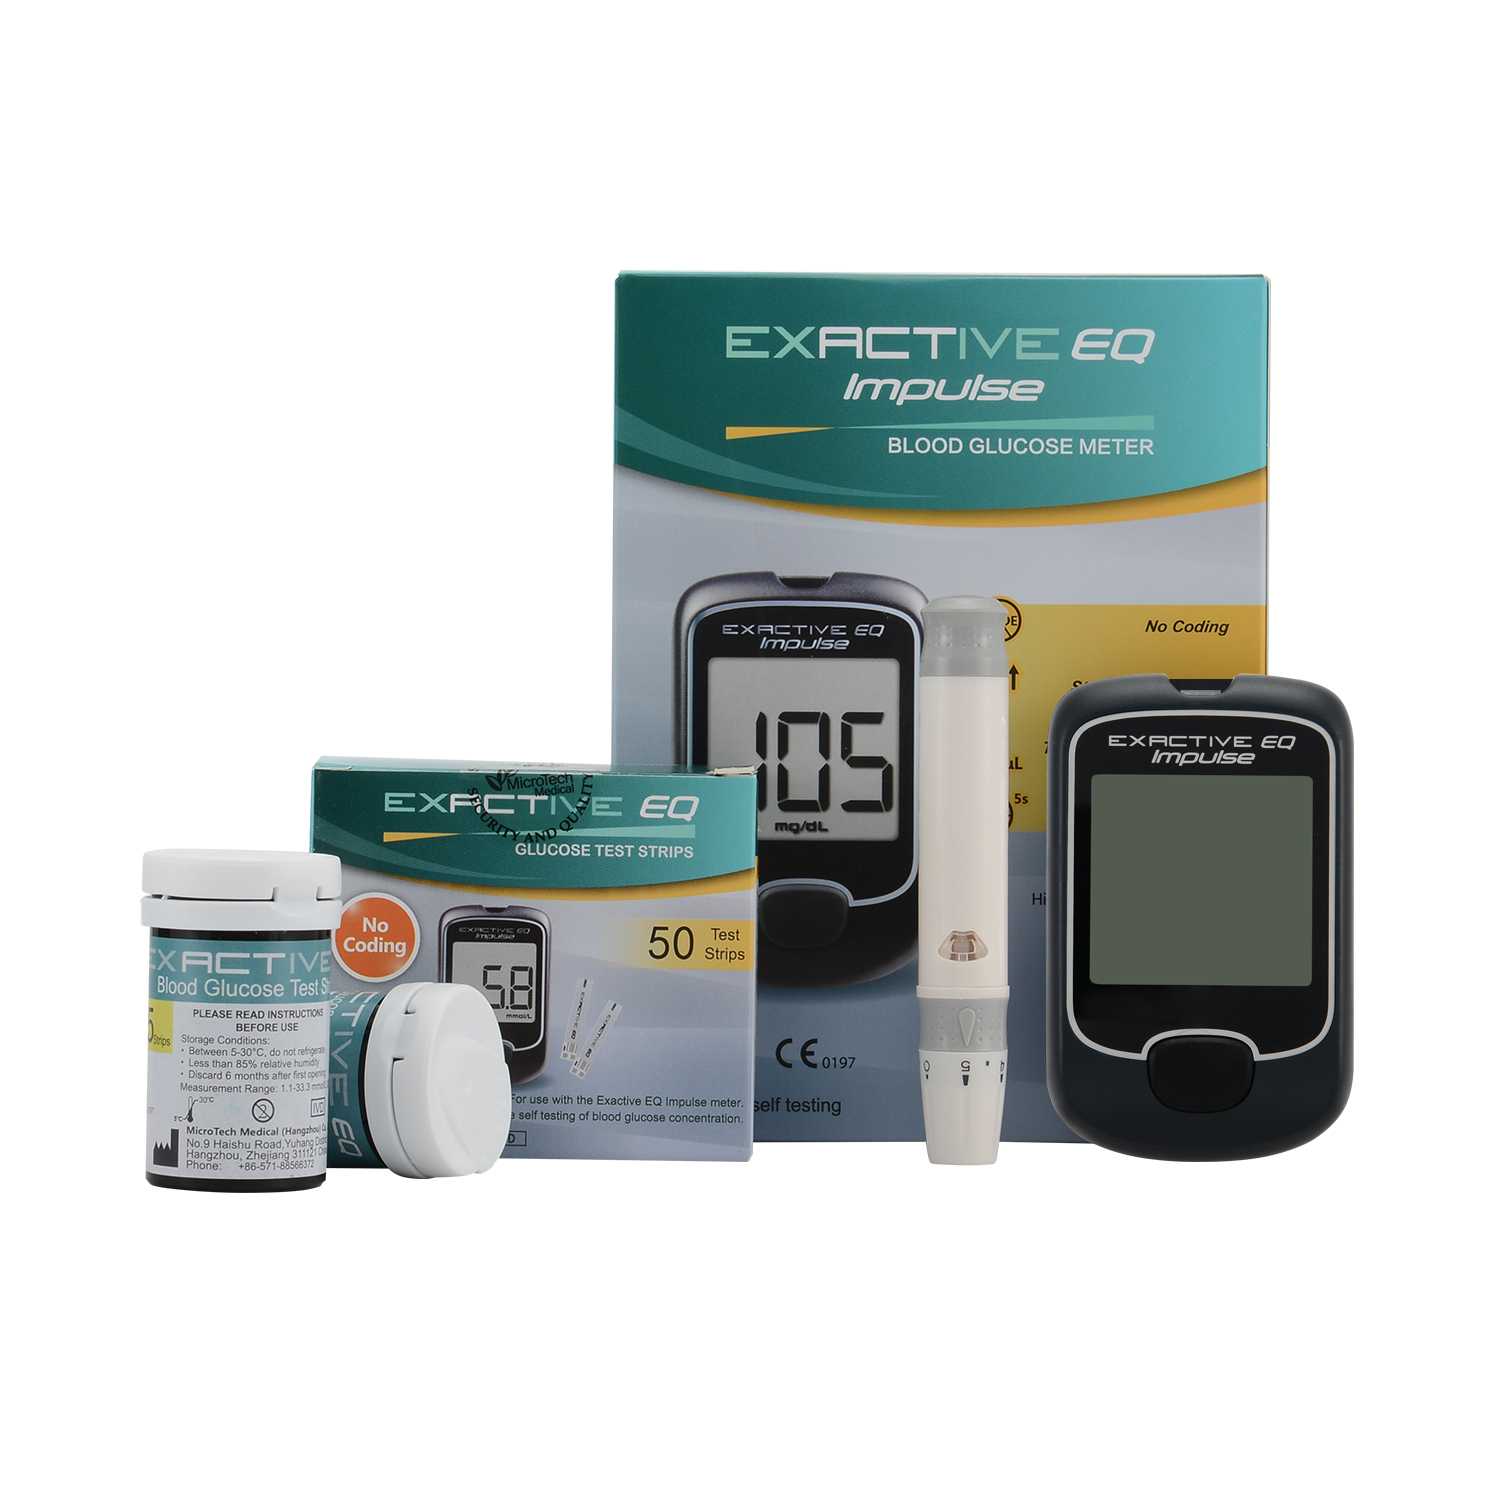 SALE🔥พร้อมจัดส่ง🔥 เครื่องวัดระดับน้ำตาลในเลือด สำหรับผู้เป็นเบาหวาน EXACTIVE EQ Impulse Blood Glucose Meter  🔥FREE Test Strip 50pcs+ Twist Lancets 50pcs🔥